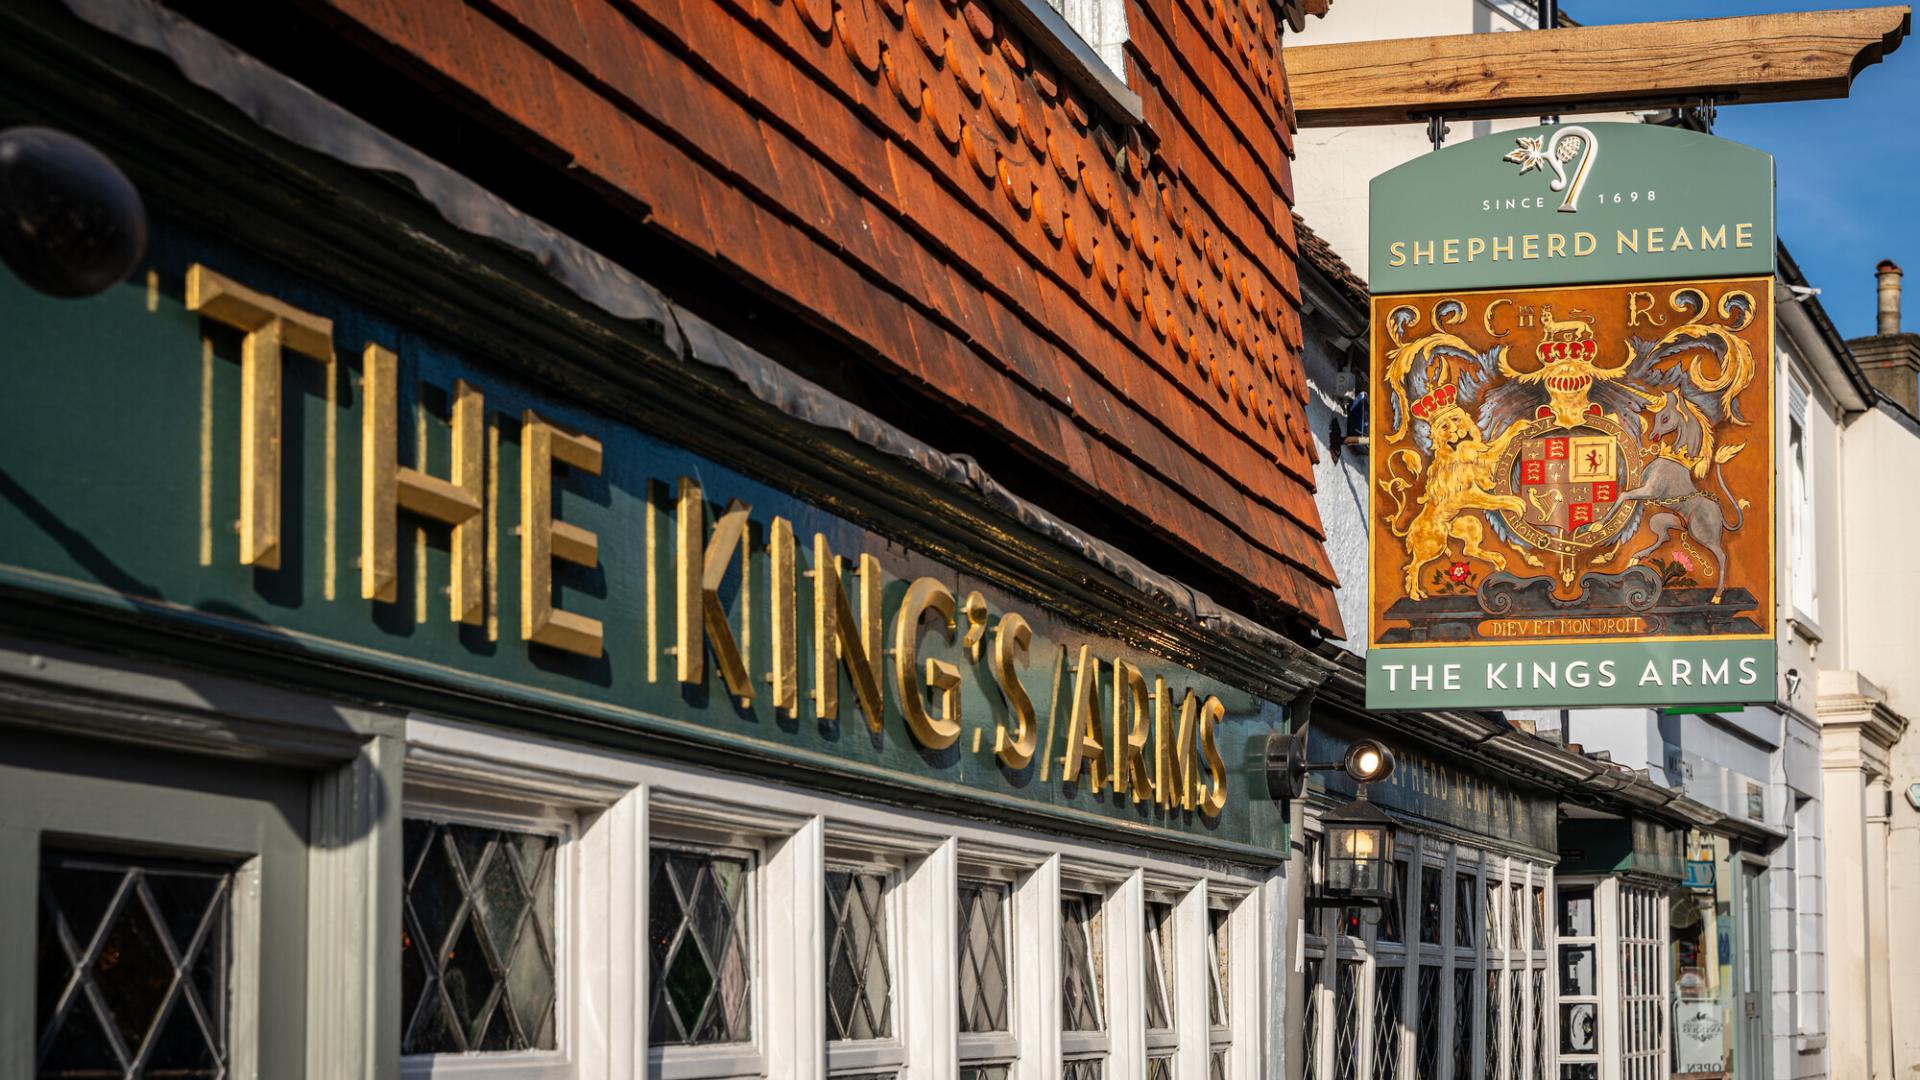 Kings Arms pub, Dorking, Shepherd Neame